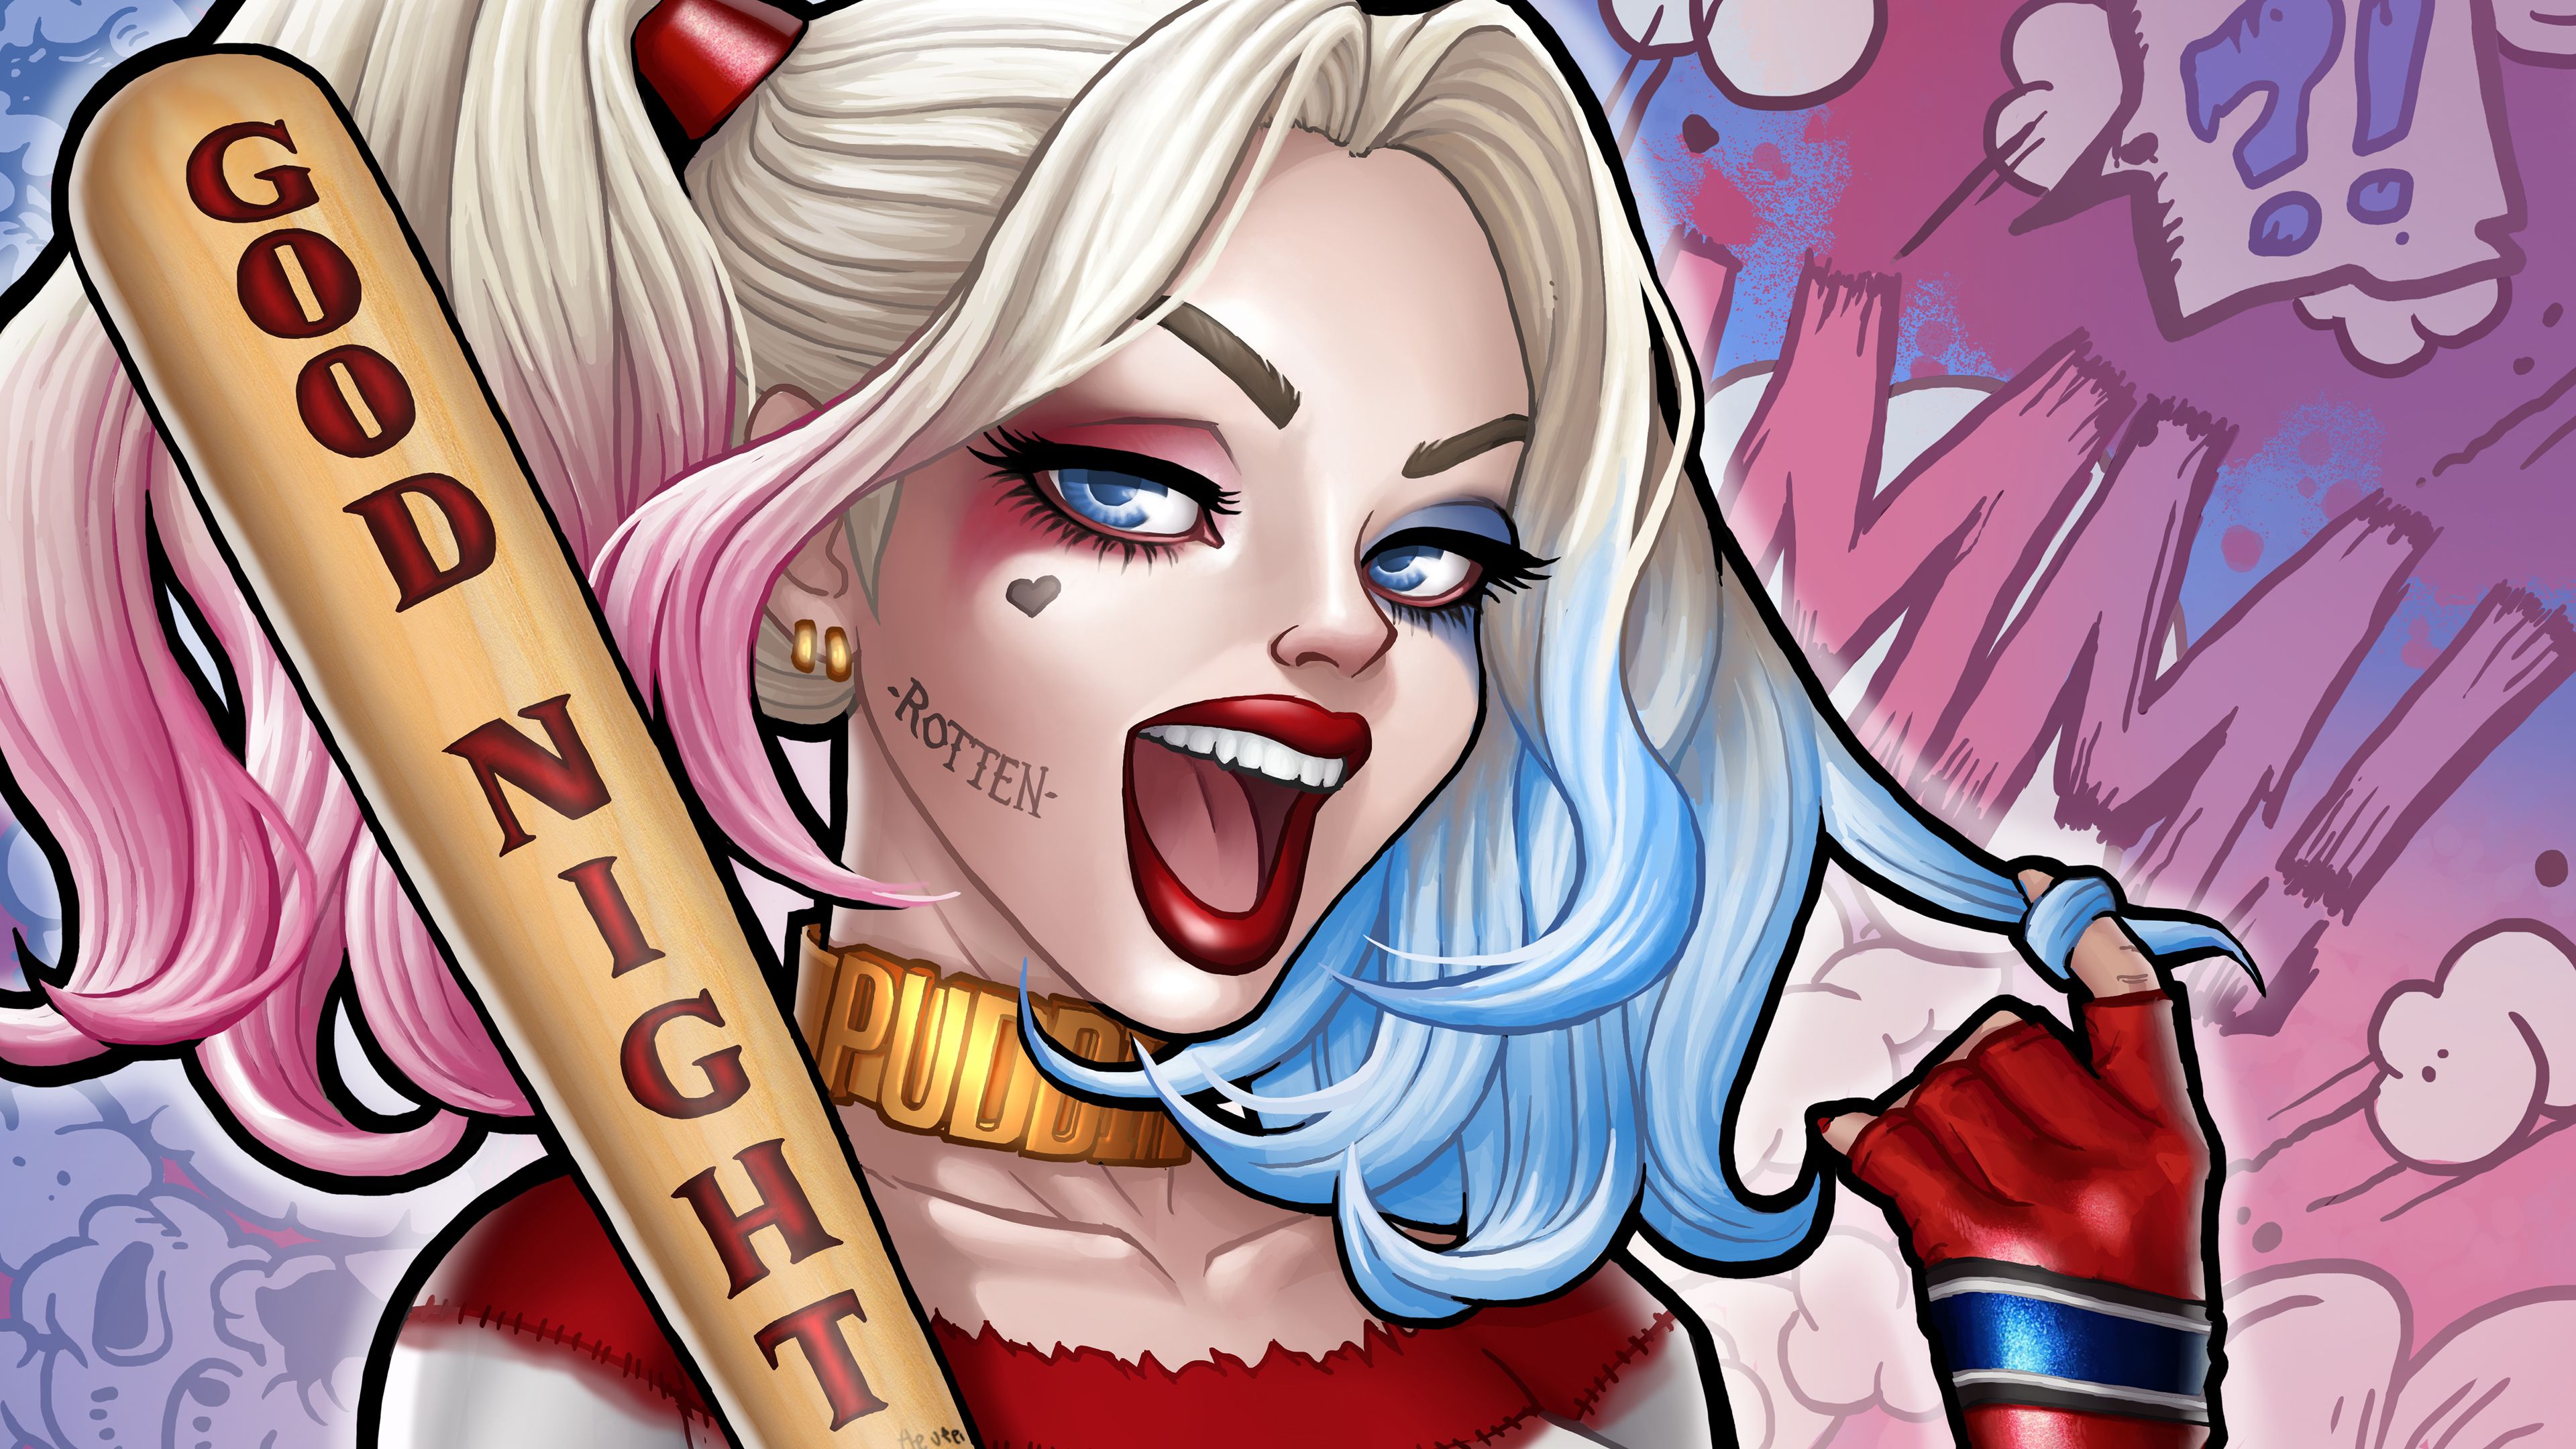 Descarga Gratis Harley Quinn Personaje De Dibujos Animados Dc Comics